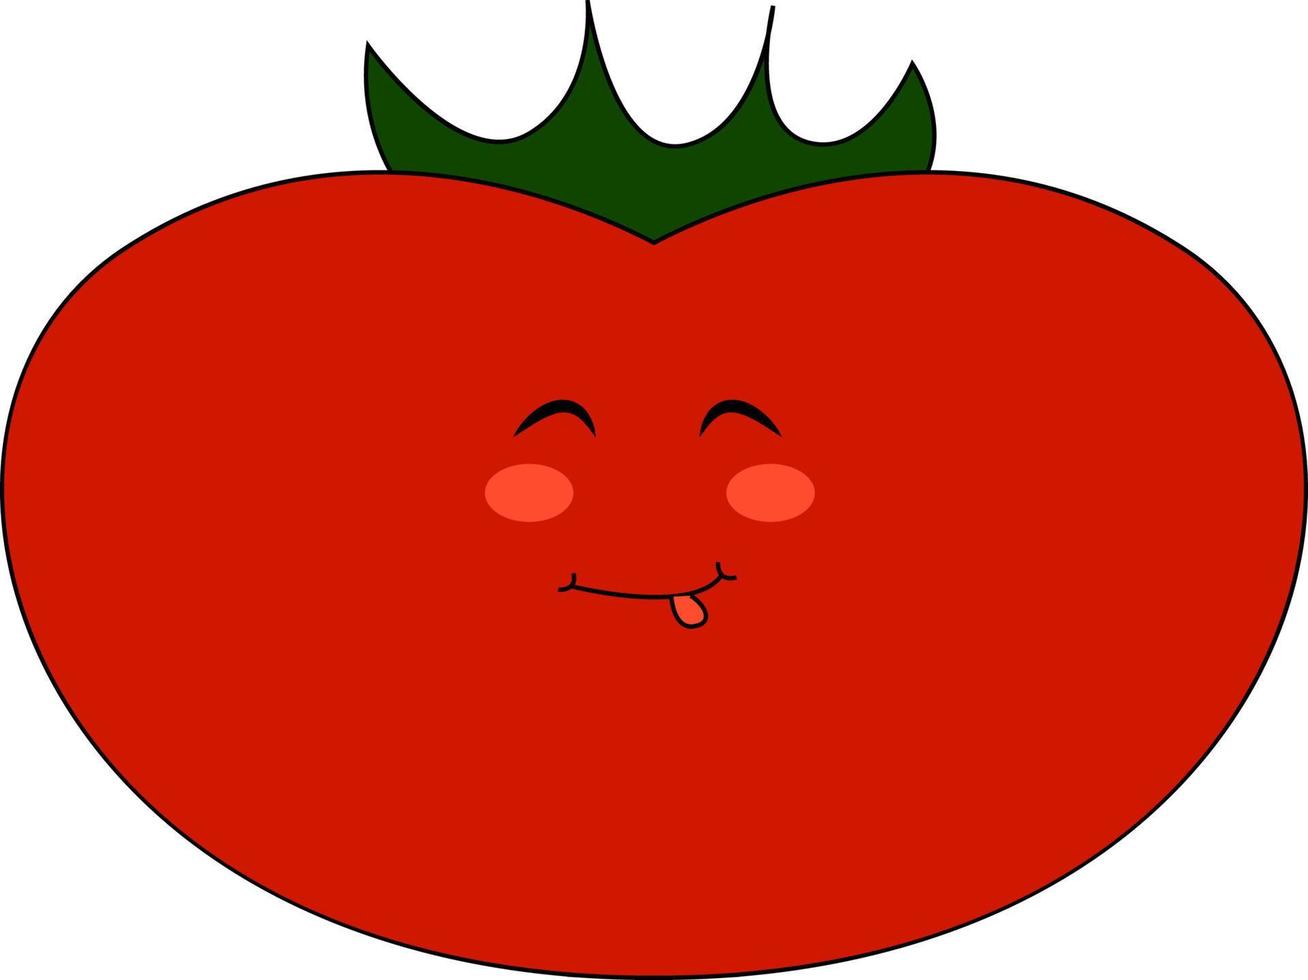 Fat tomato, illustration, vector on white background